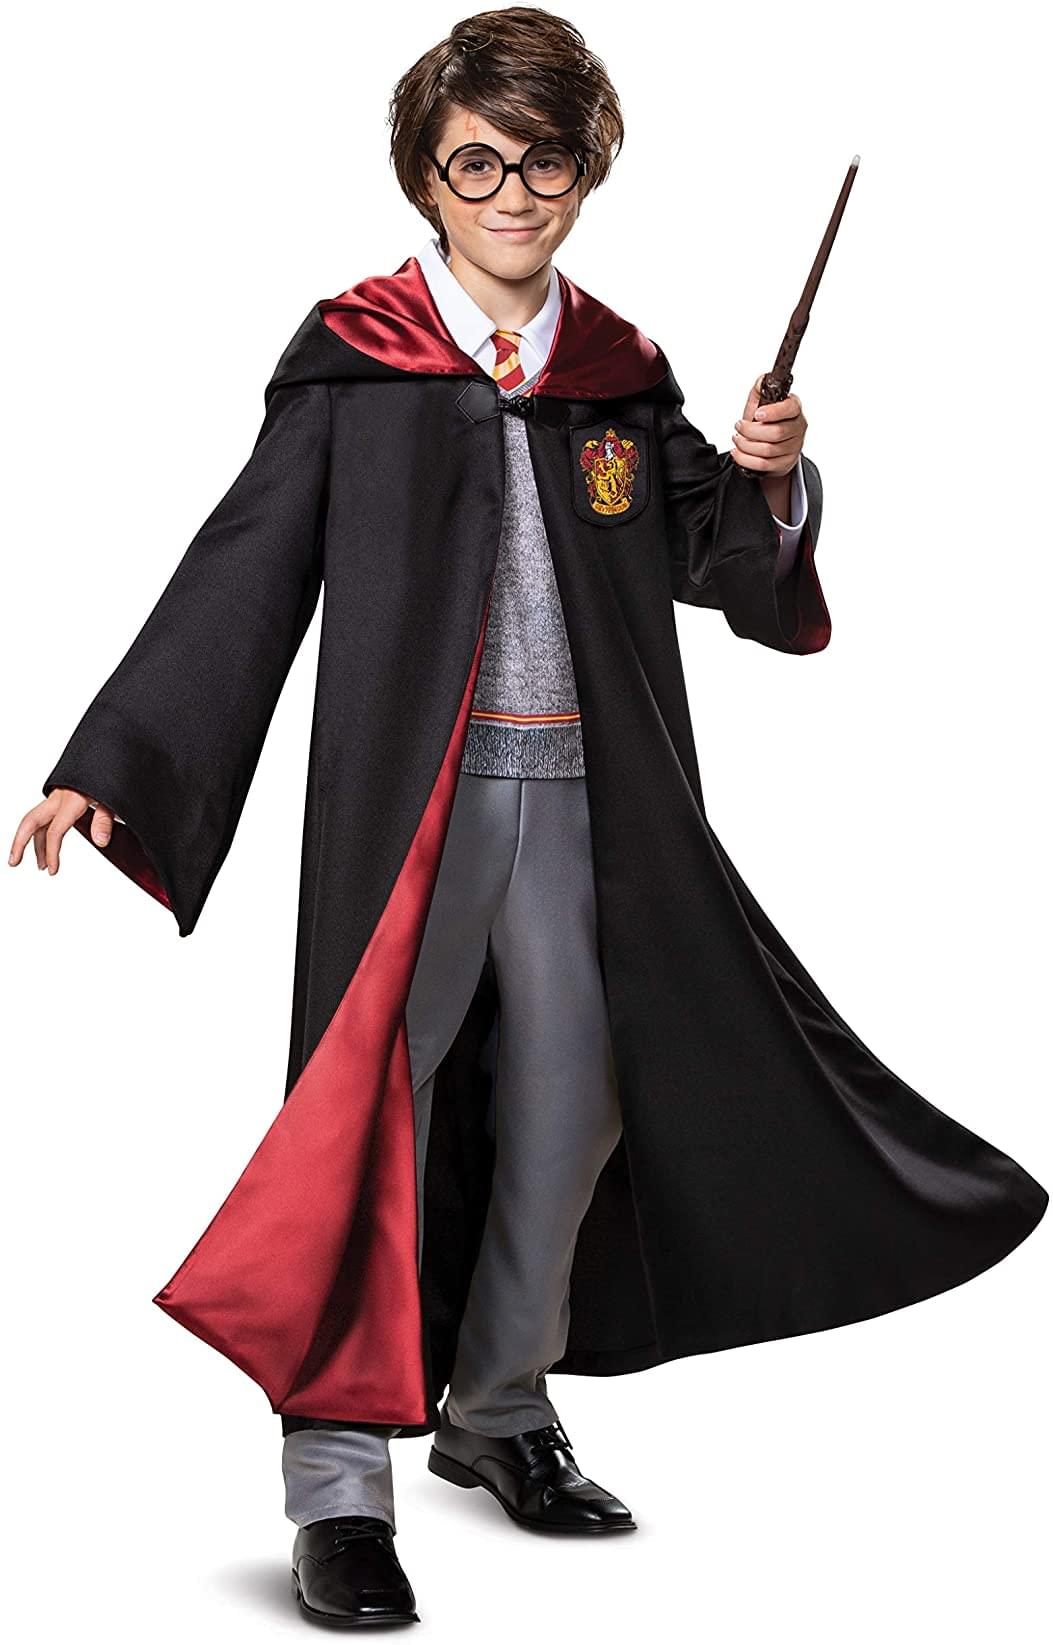 Harry Potter Prestige Child Costume | Free Shipping